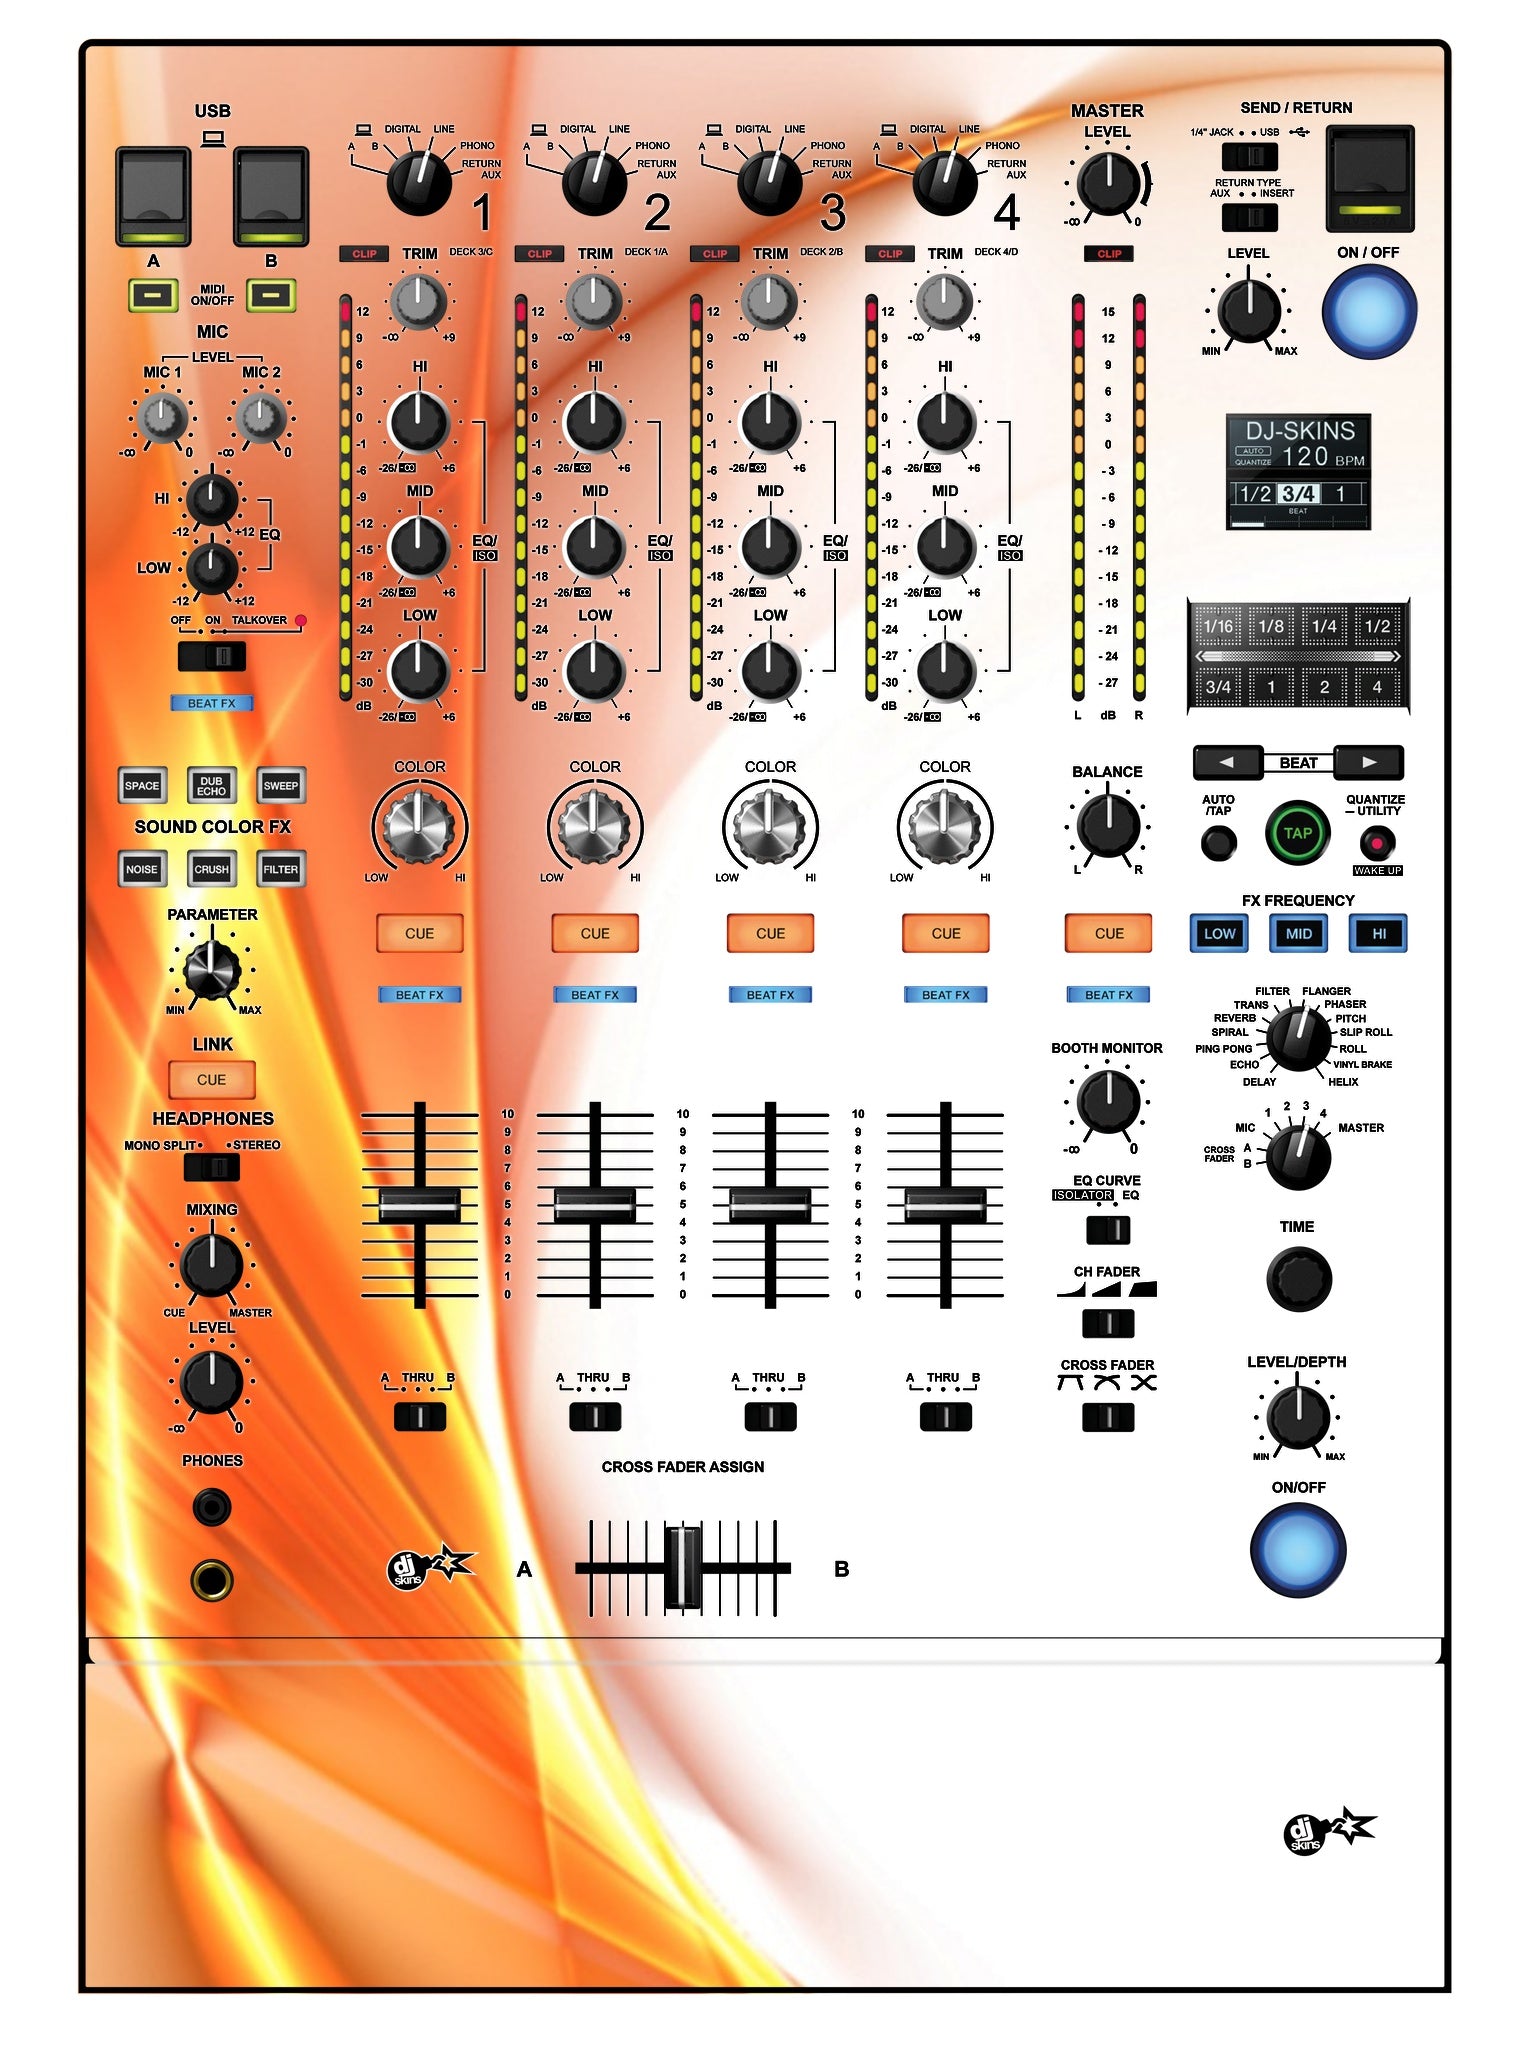 Pioneer DJ DJM 900 NEXUS 2 Skin Orange Swirl